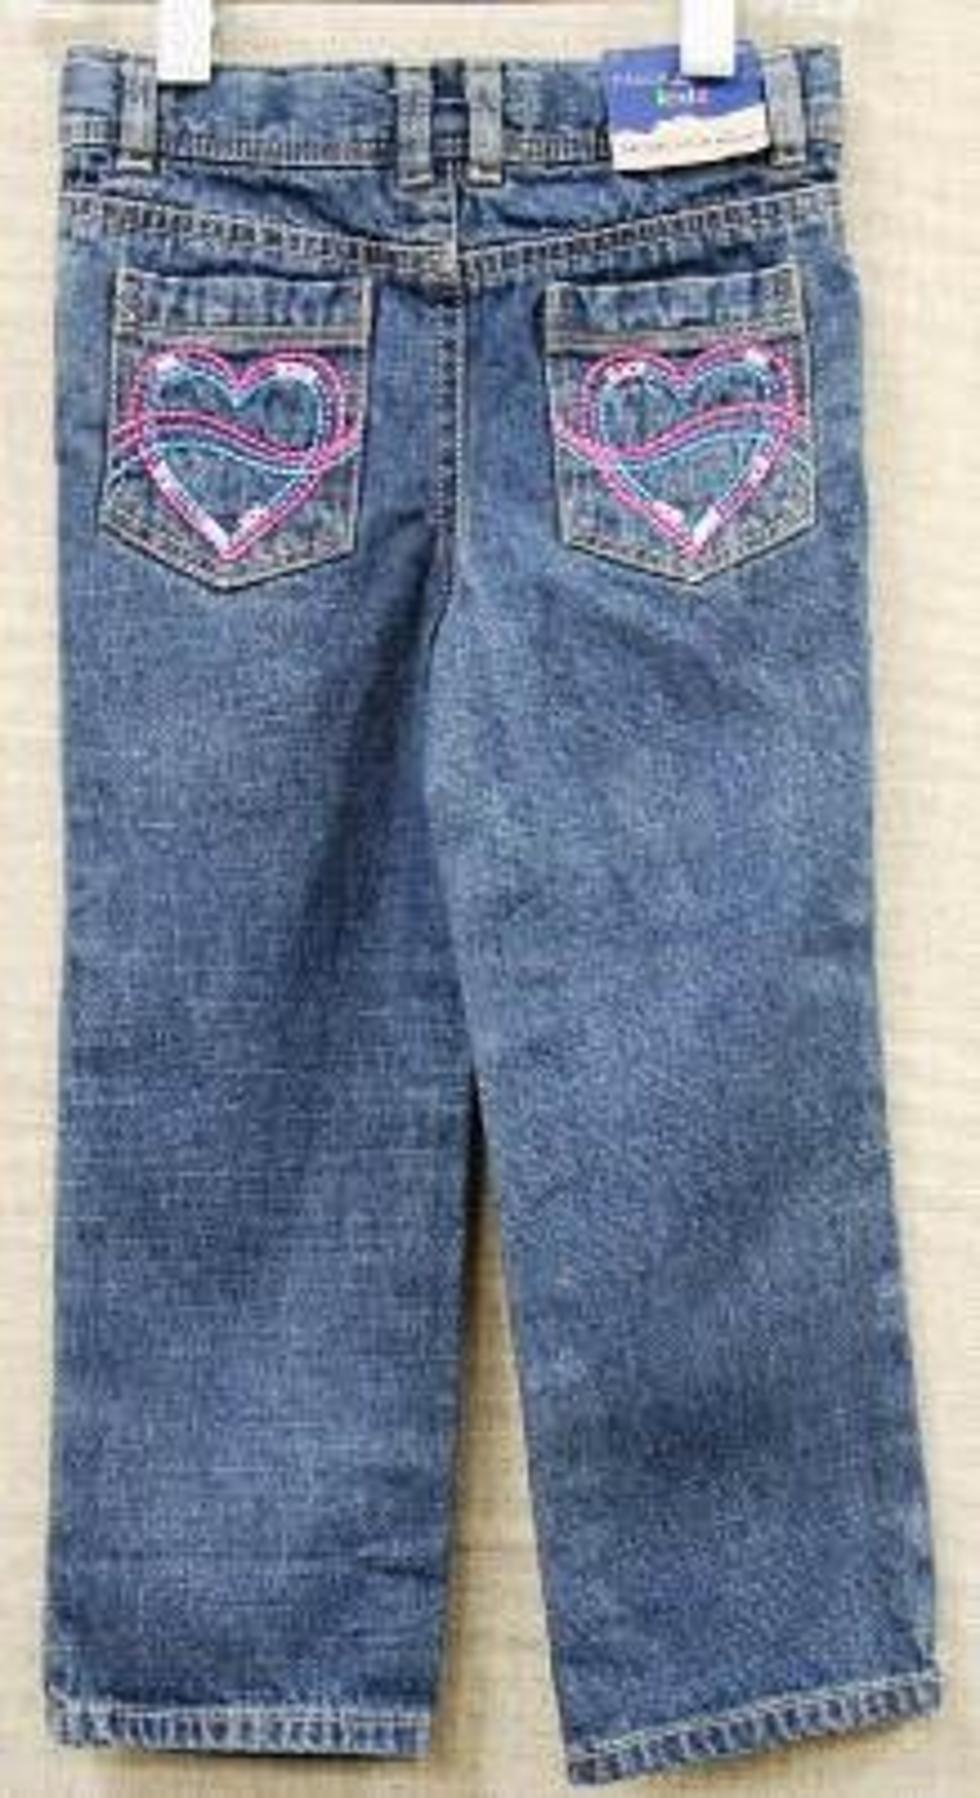 Recall: Falls Creek Jeans